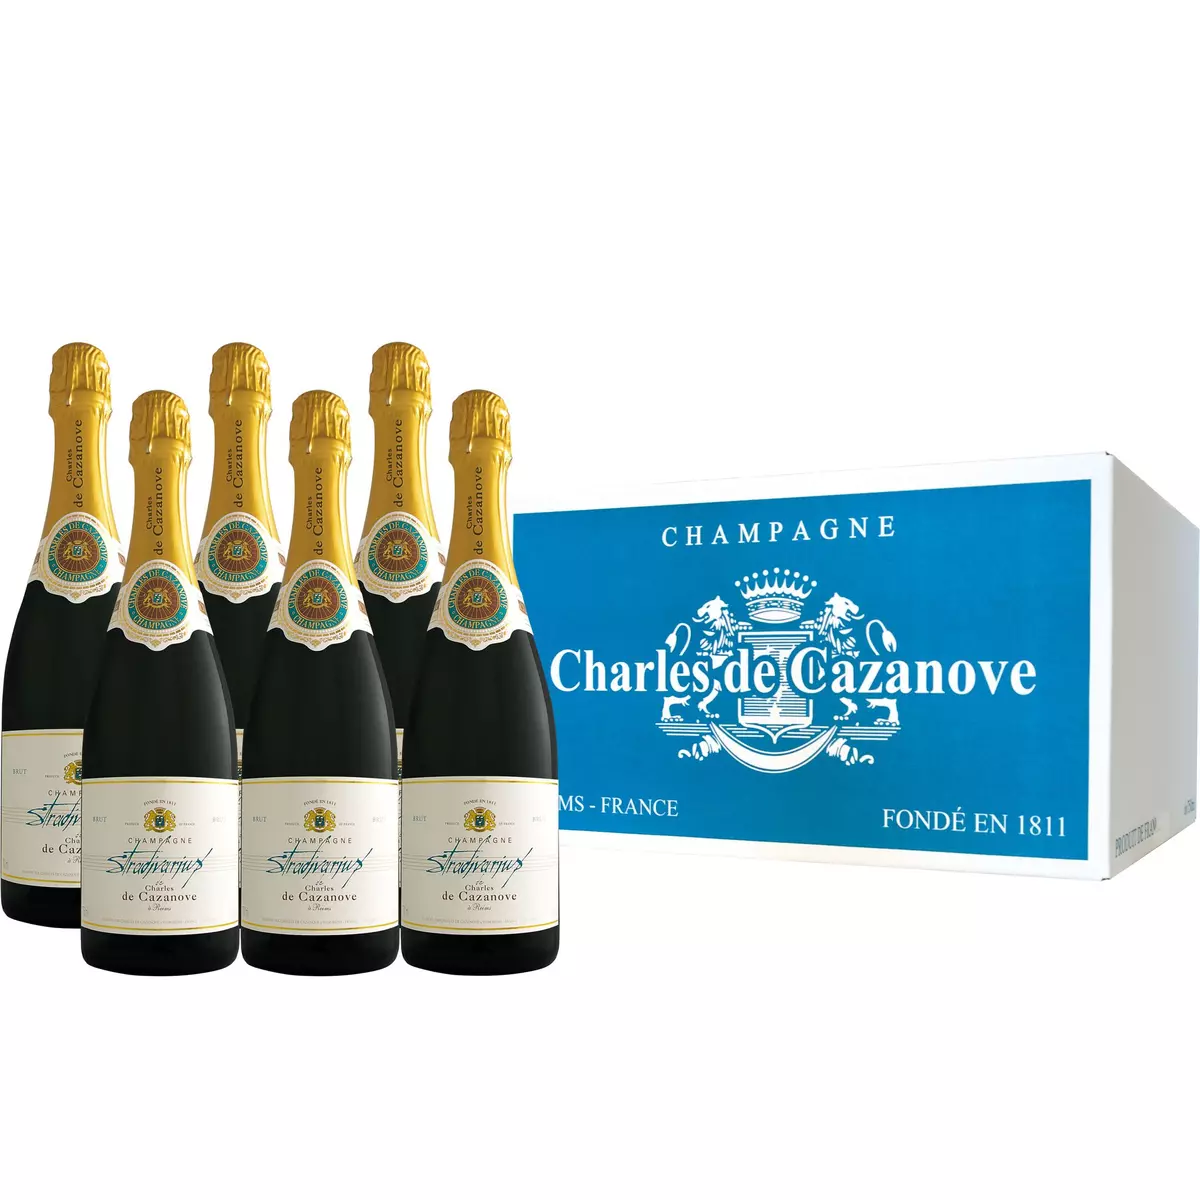 CHARLES DE CAZANOVE AOP Champagne brut 6x75cl